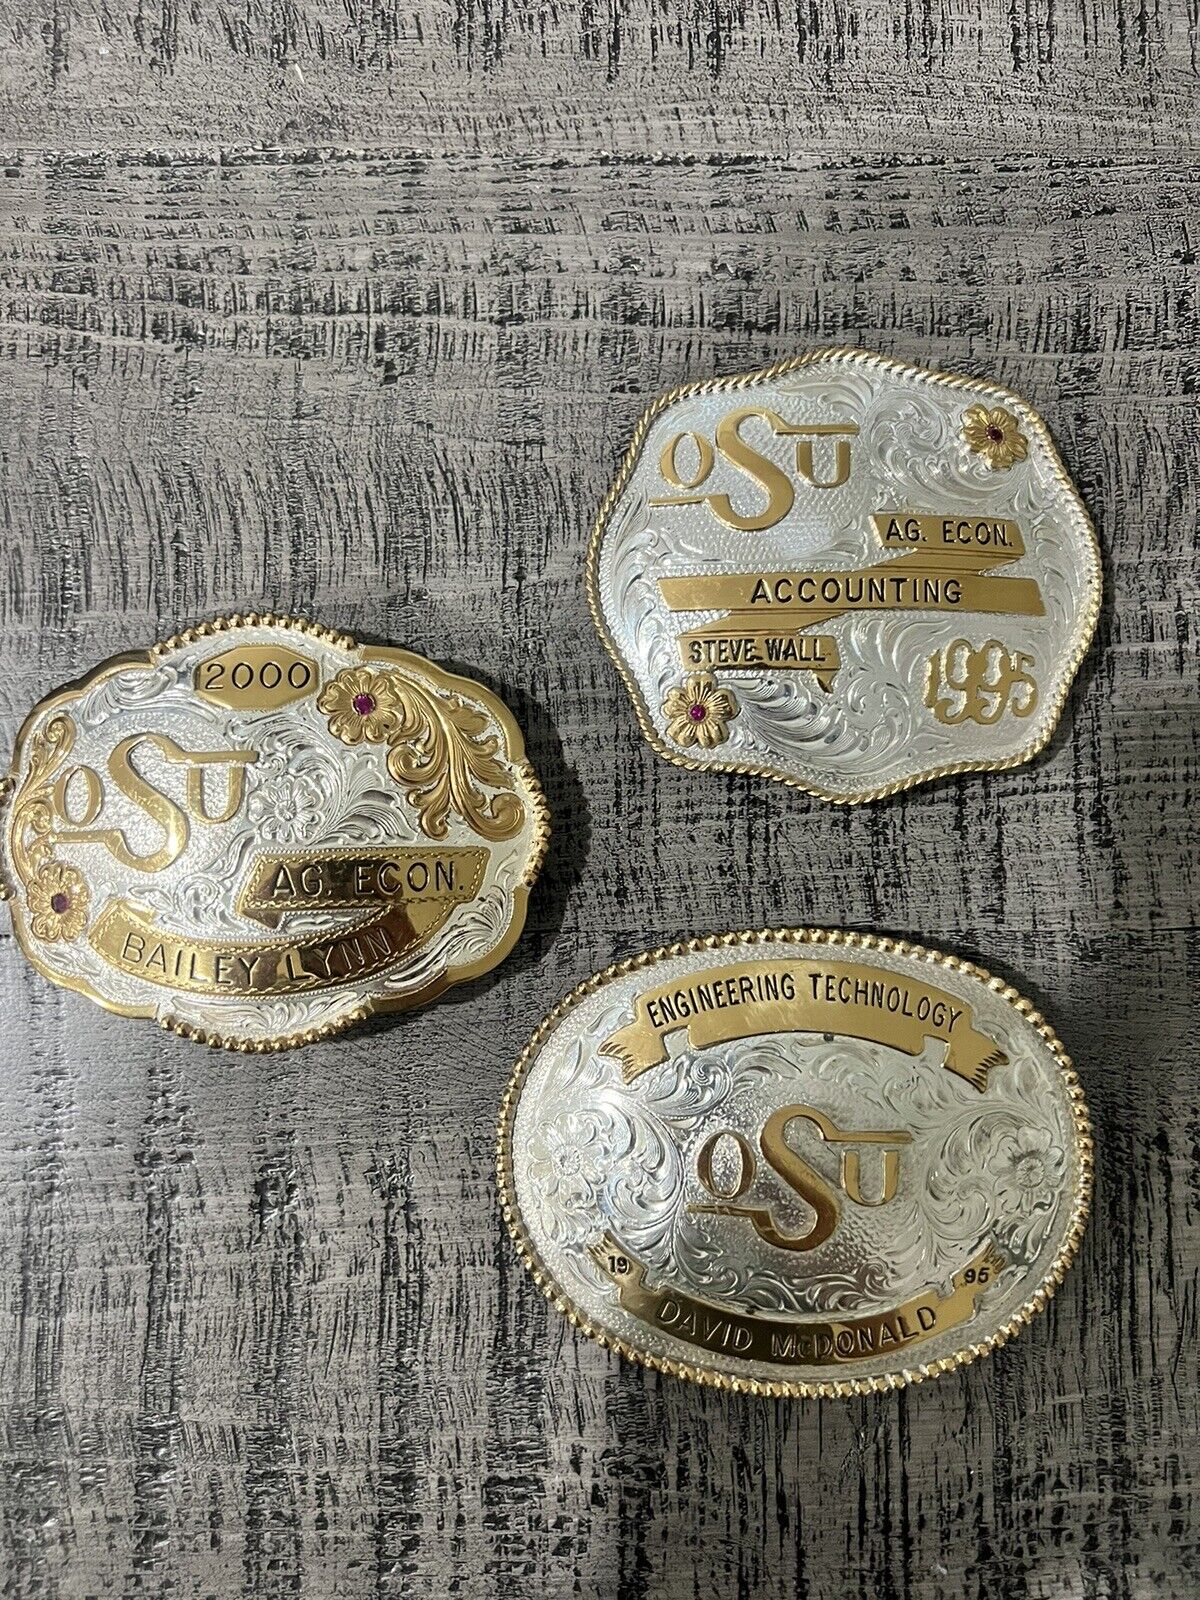 1 Of 3 Oklahoma State university OSU Vintage Belt Buckles